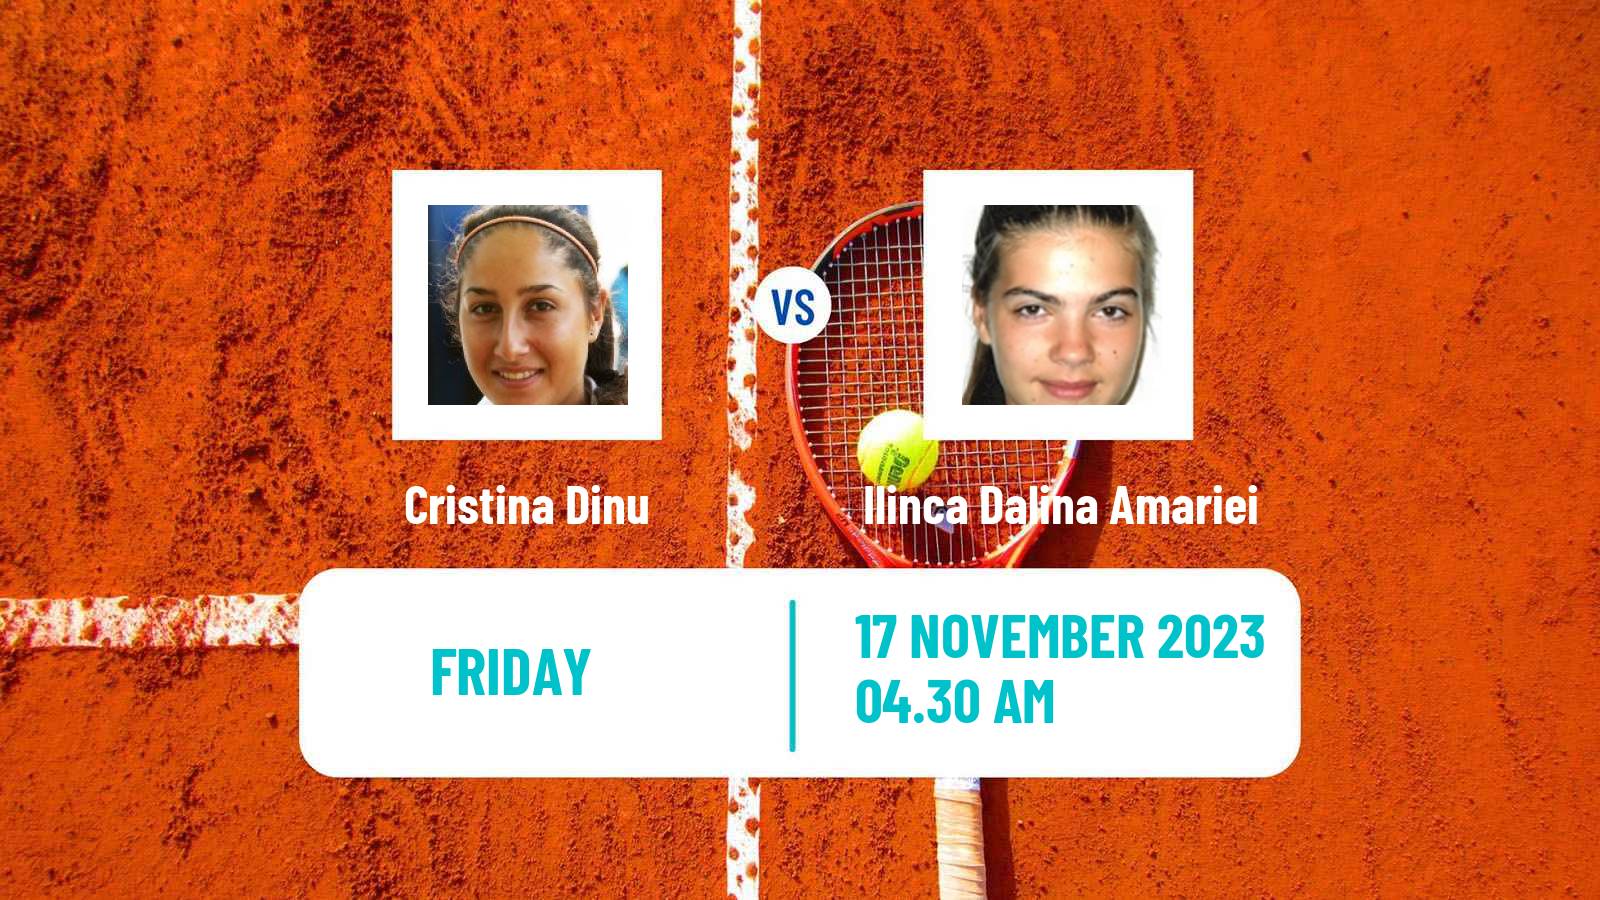 Tennis ITF W25 Heraklion 2 Women Cristina Dinu - Ilinca Dalina Amariei